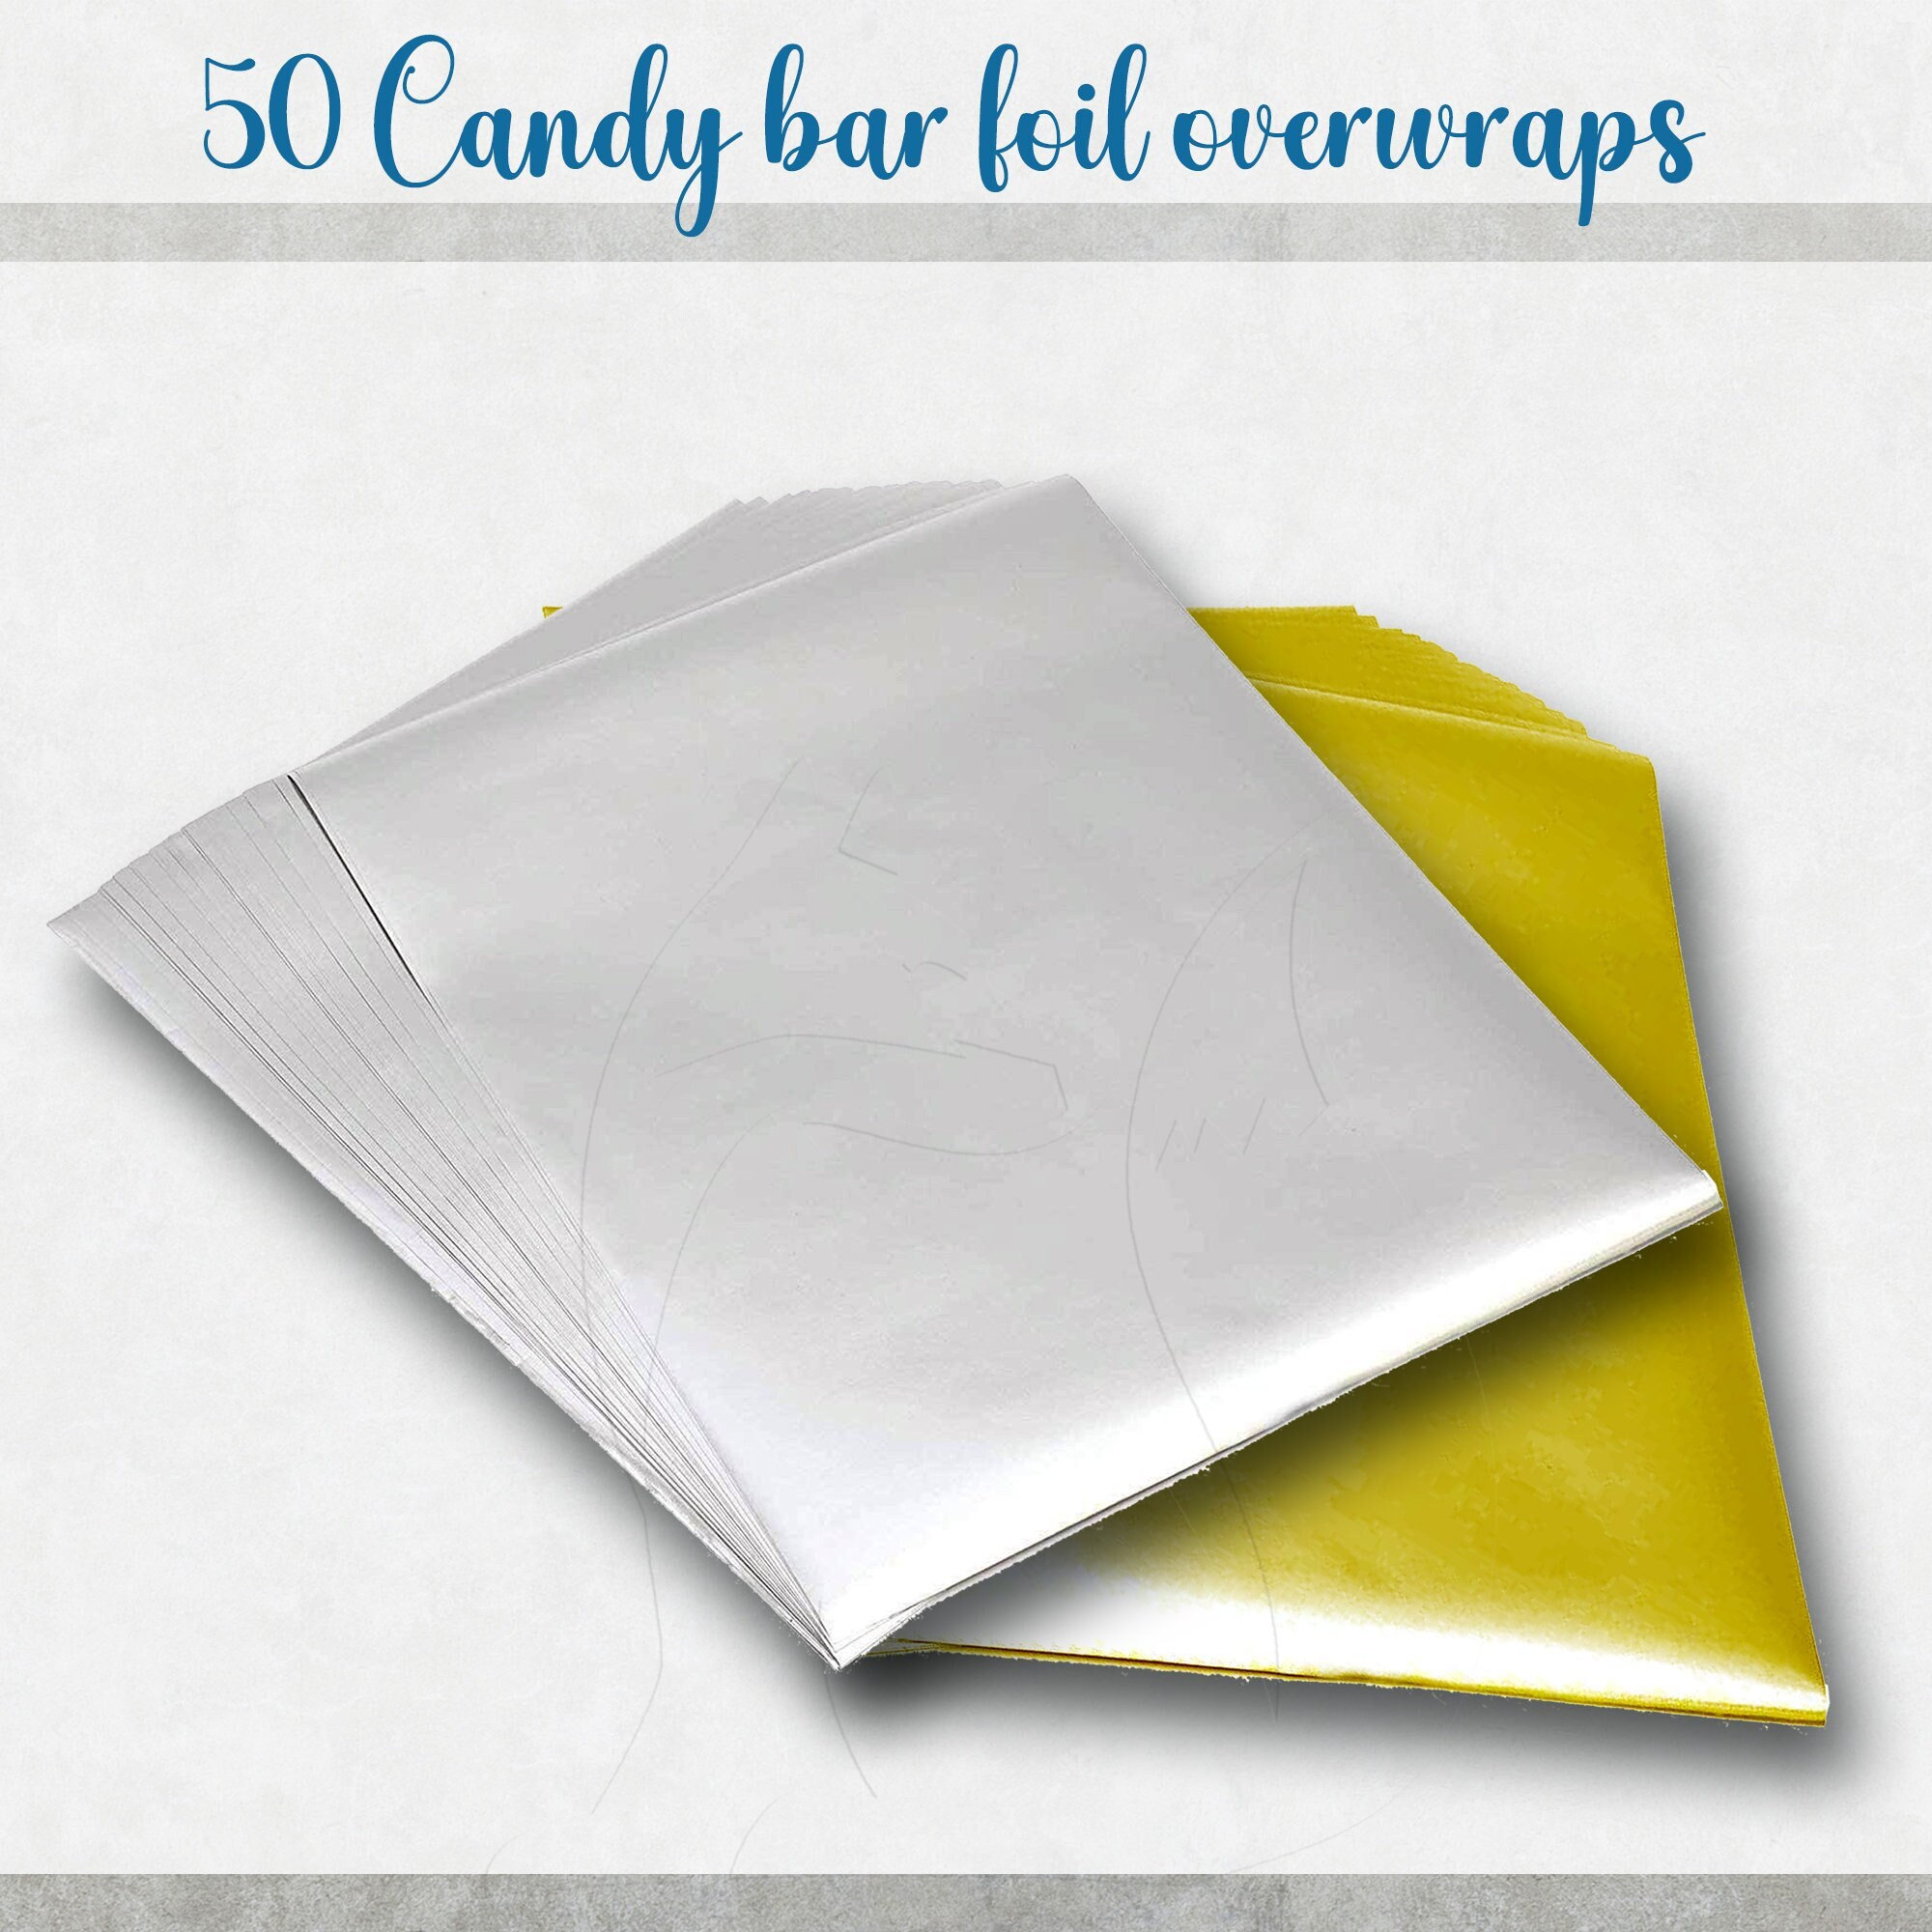 Silver Foil Sheets, Food Craft Supplies, Precut Foil, Chocolate Bar Foil,  Foil for Chocolate, Chocolate Foil, Silver Foil Candy set of 40 